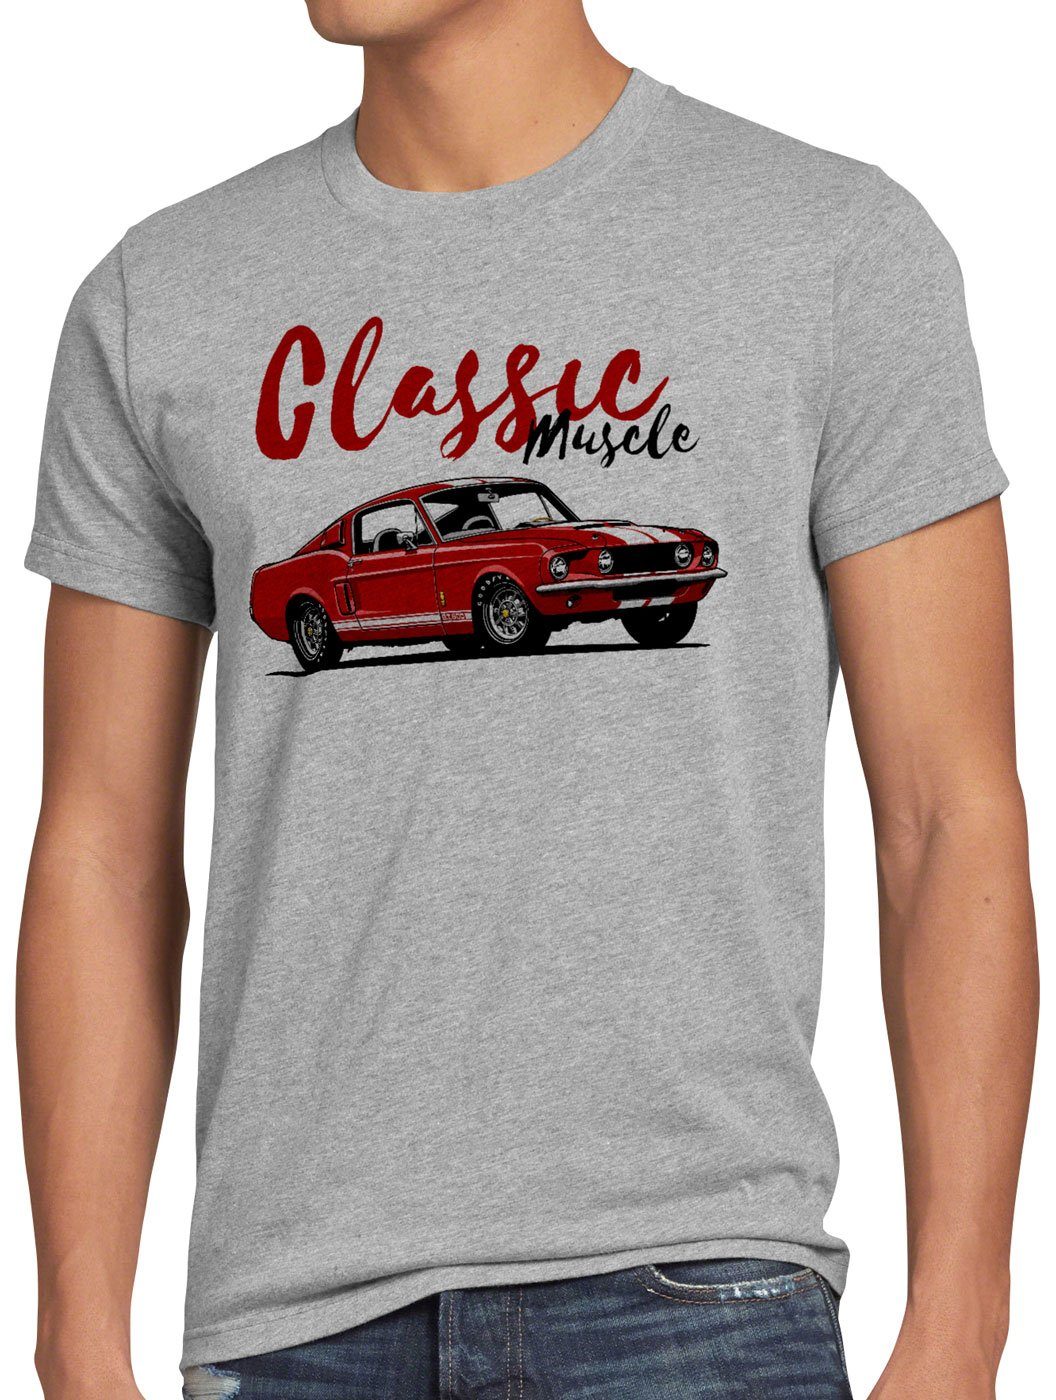 style3 Print-Shirt Herren T-Shirt Classic Muscle Car eleanor mustang usa v8 gt500 grau meliert